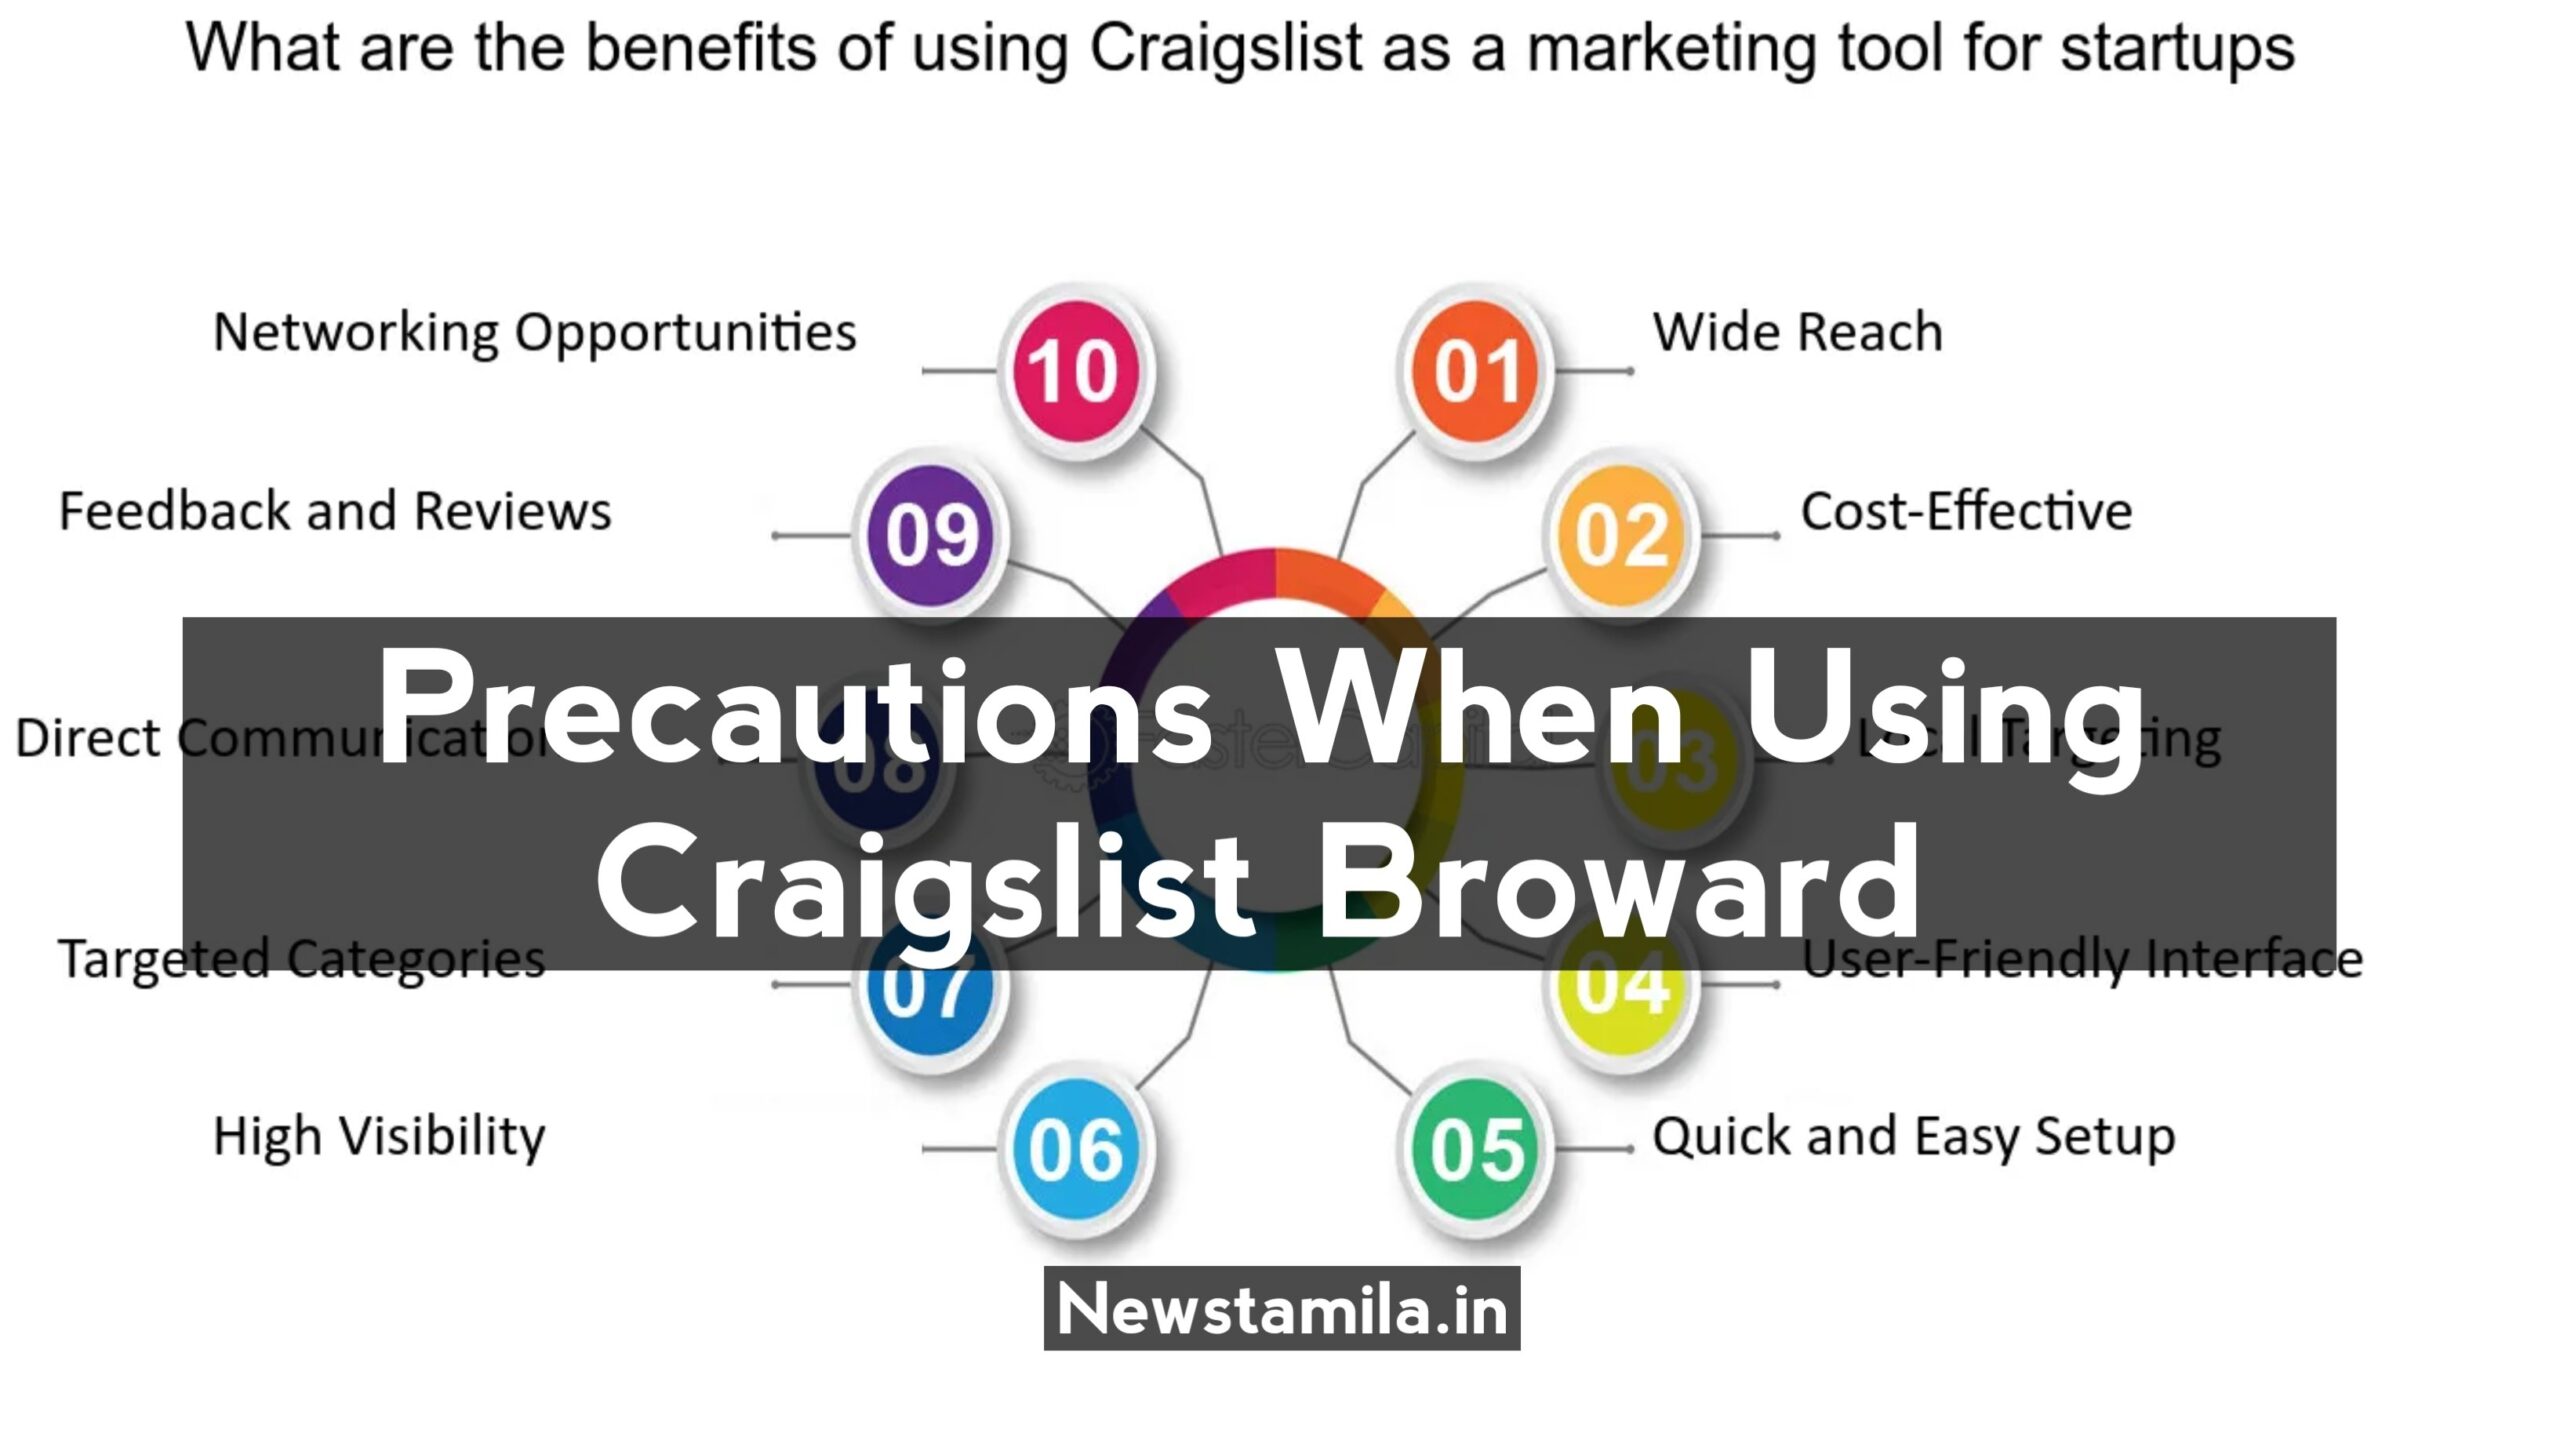 Precautions When Using Craigslist Broward